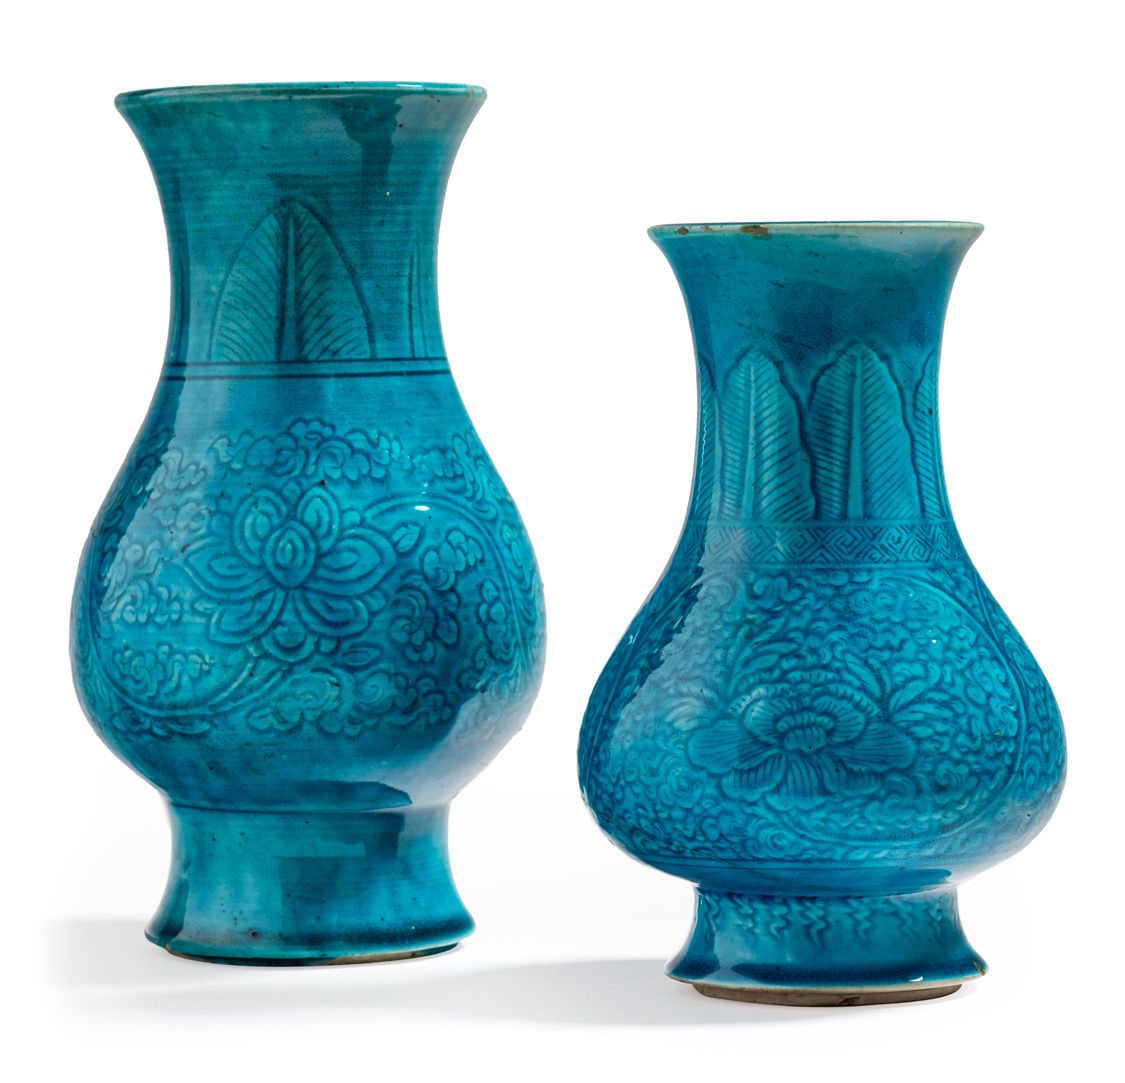 CHINE XVIIIe SIÈCLE, PÉRIODE KANGXI (1661 - 1722) 
Zwei Vasen aus türkis emailli&hellip;